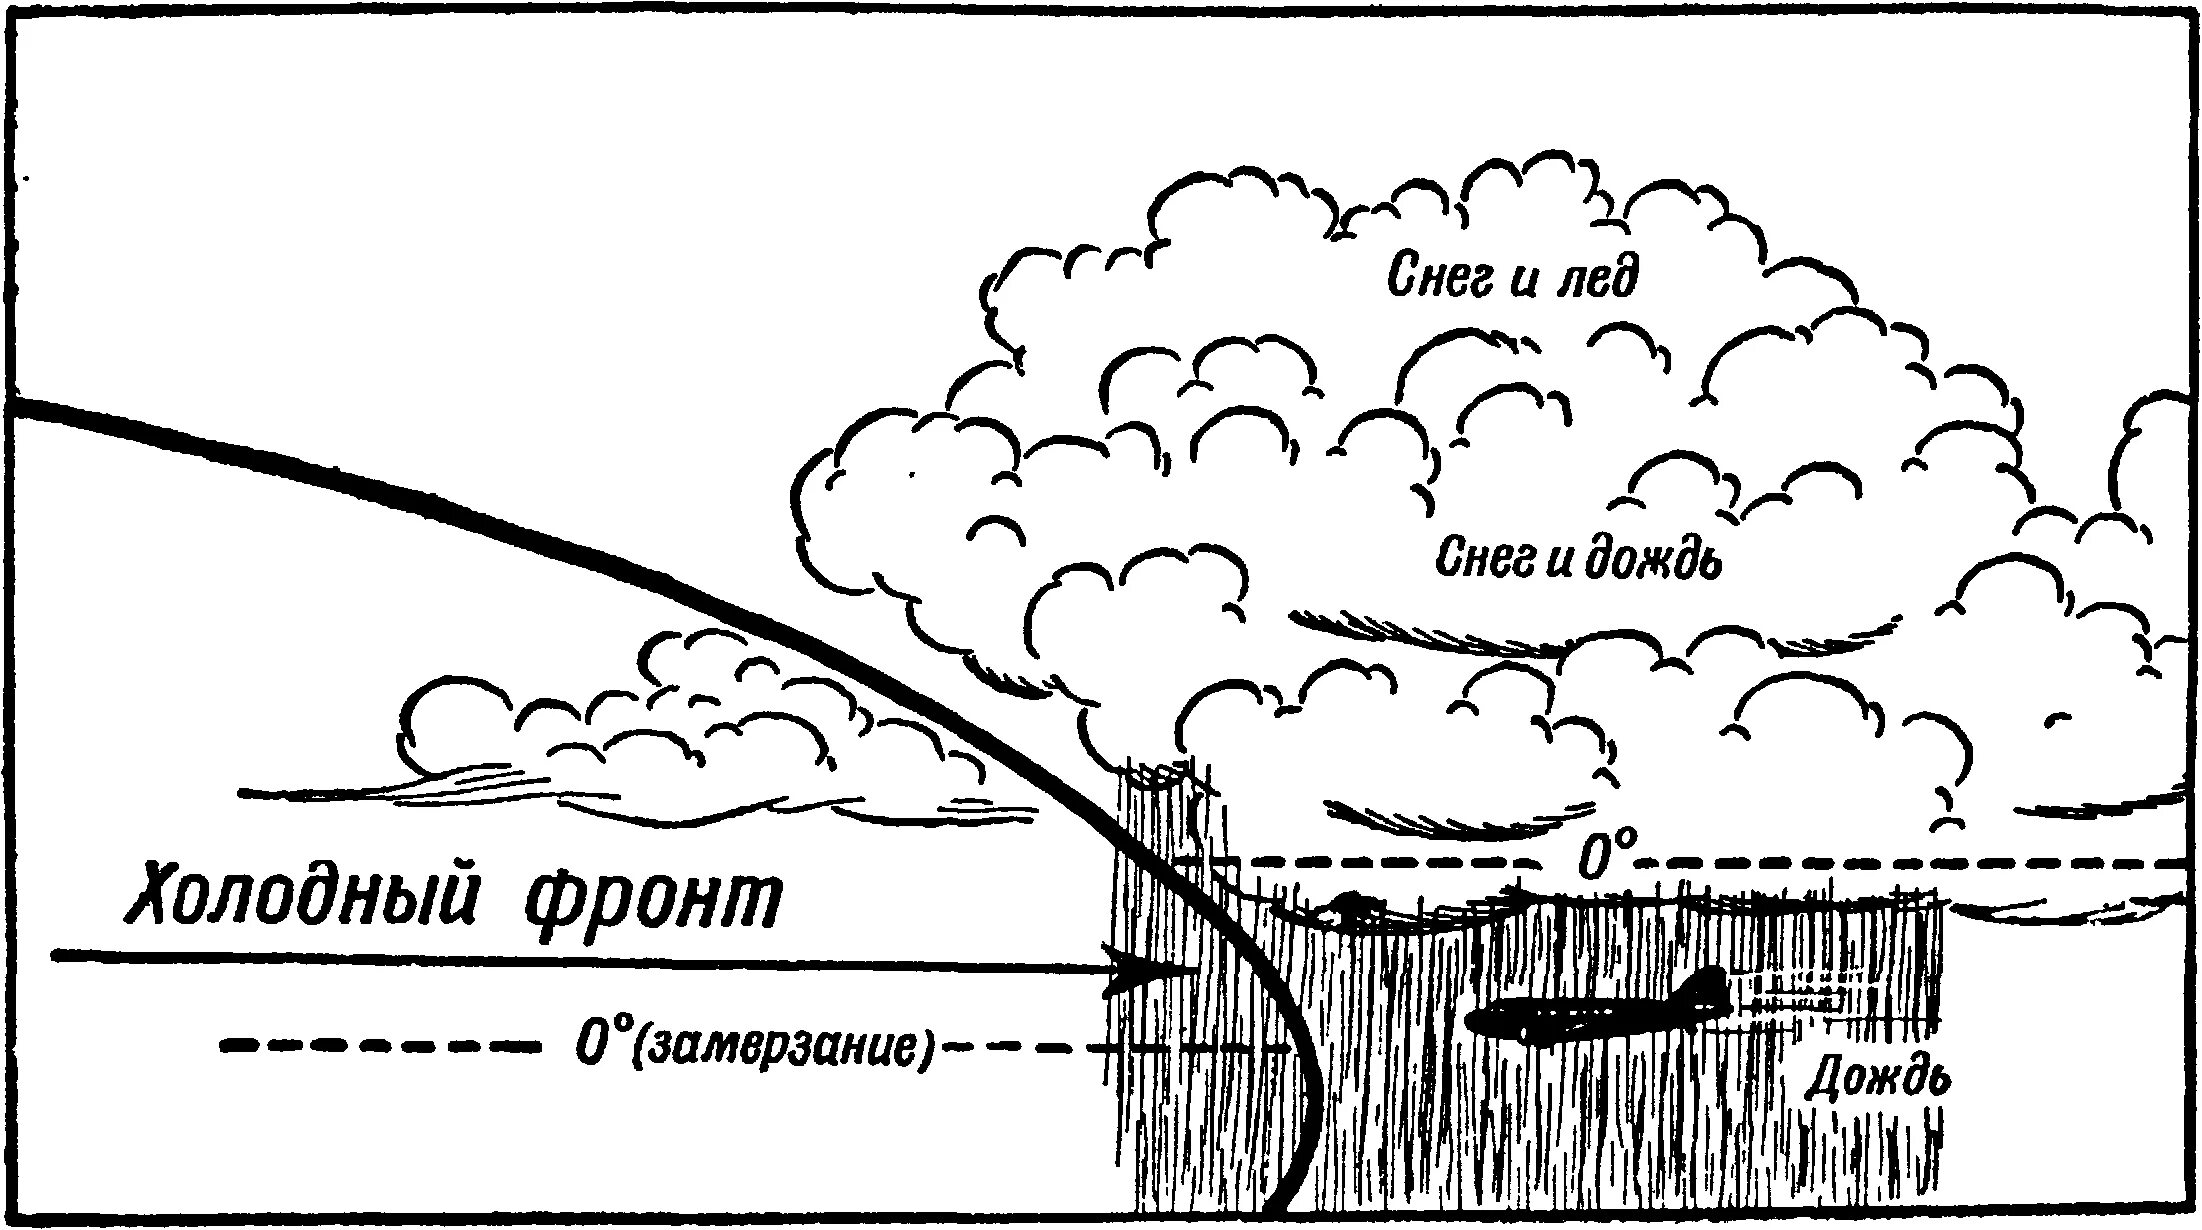 Элементы облачности\. Схема холодного фронта. Образование облаков. Схема образования облаков.